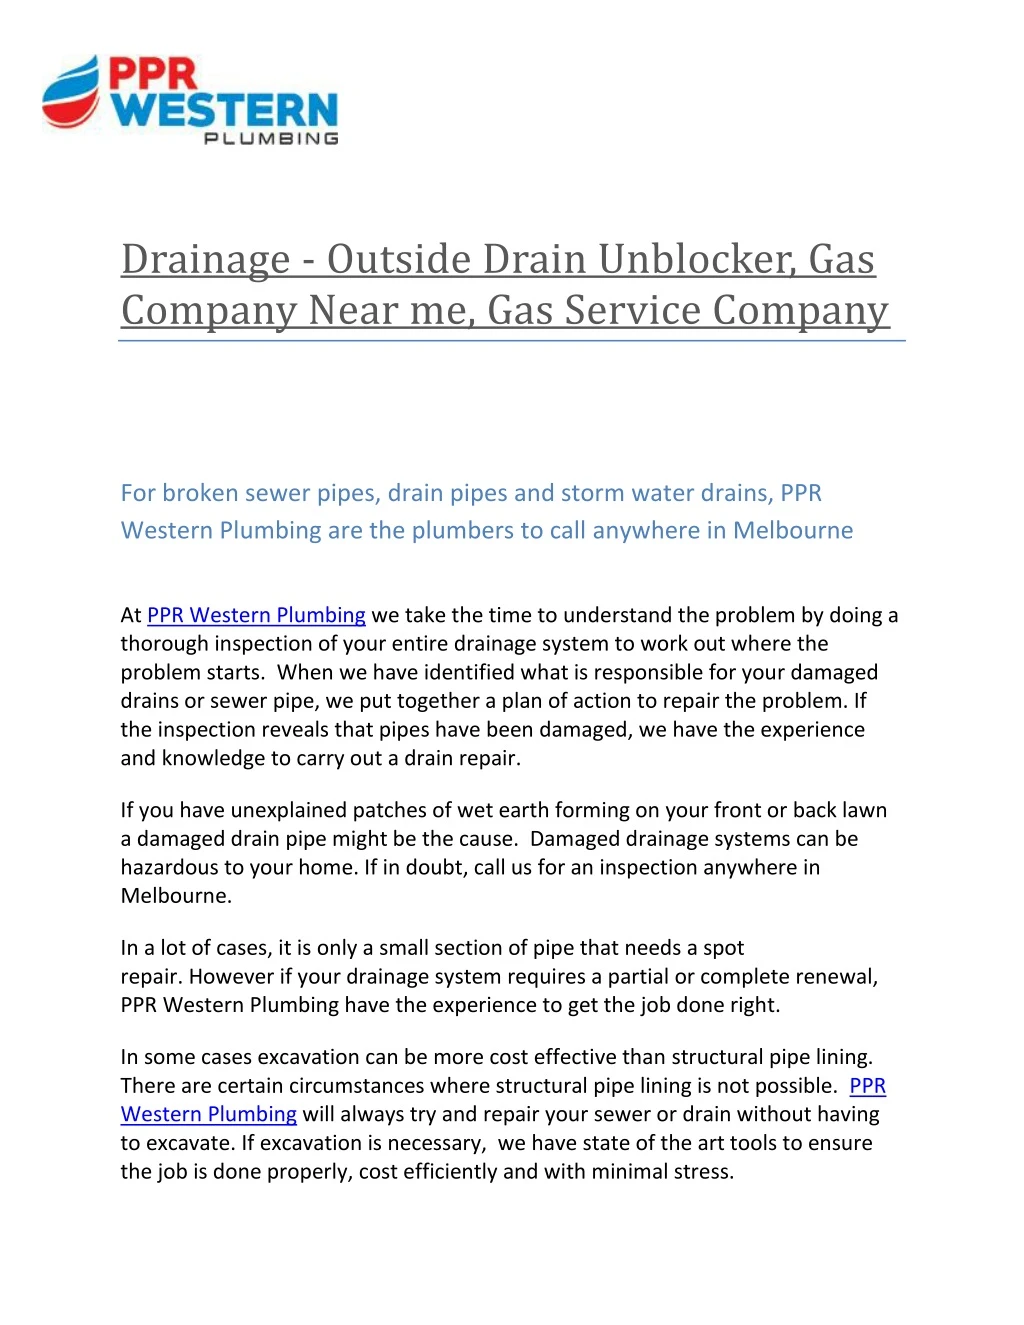 drainage outside drain unblocker gas company near